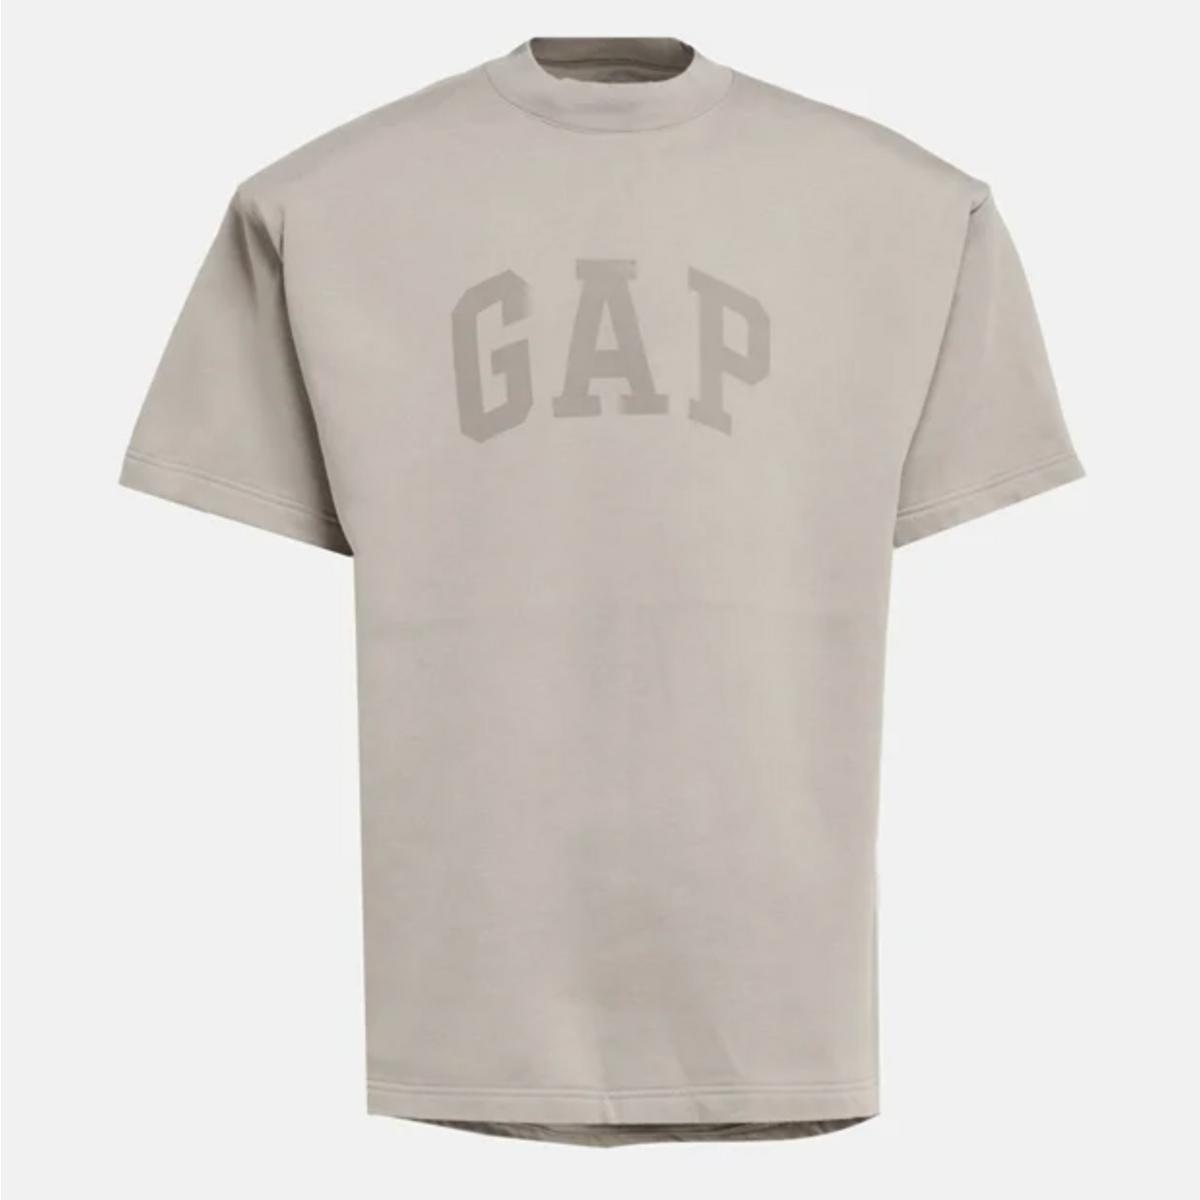 Yeezy Gap Engineered by Balenciaga T-Shirt Dark Gray